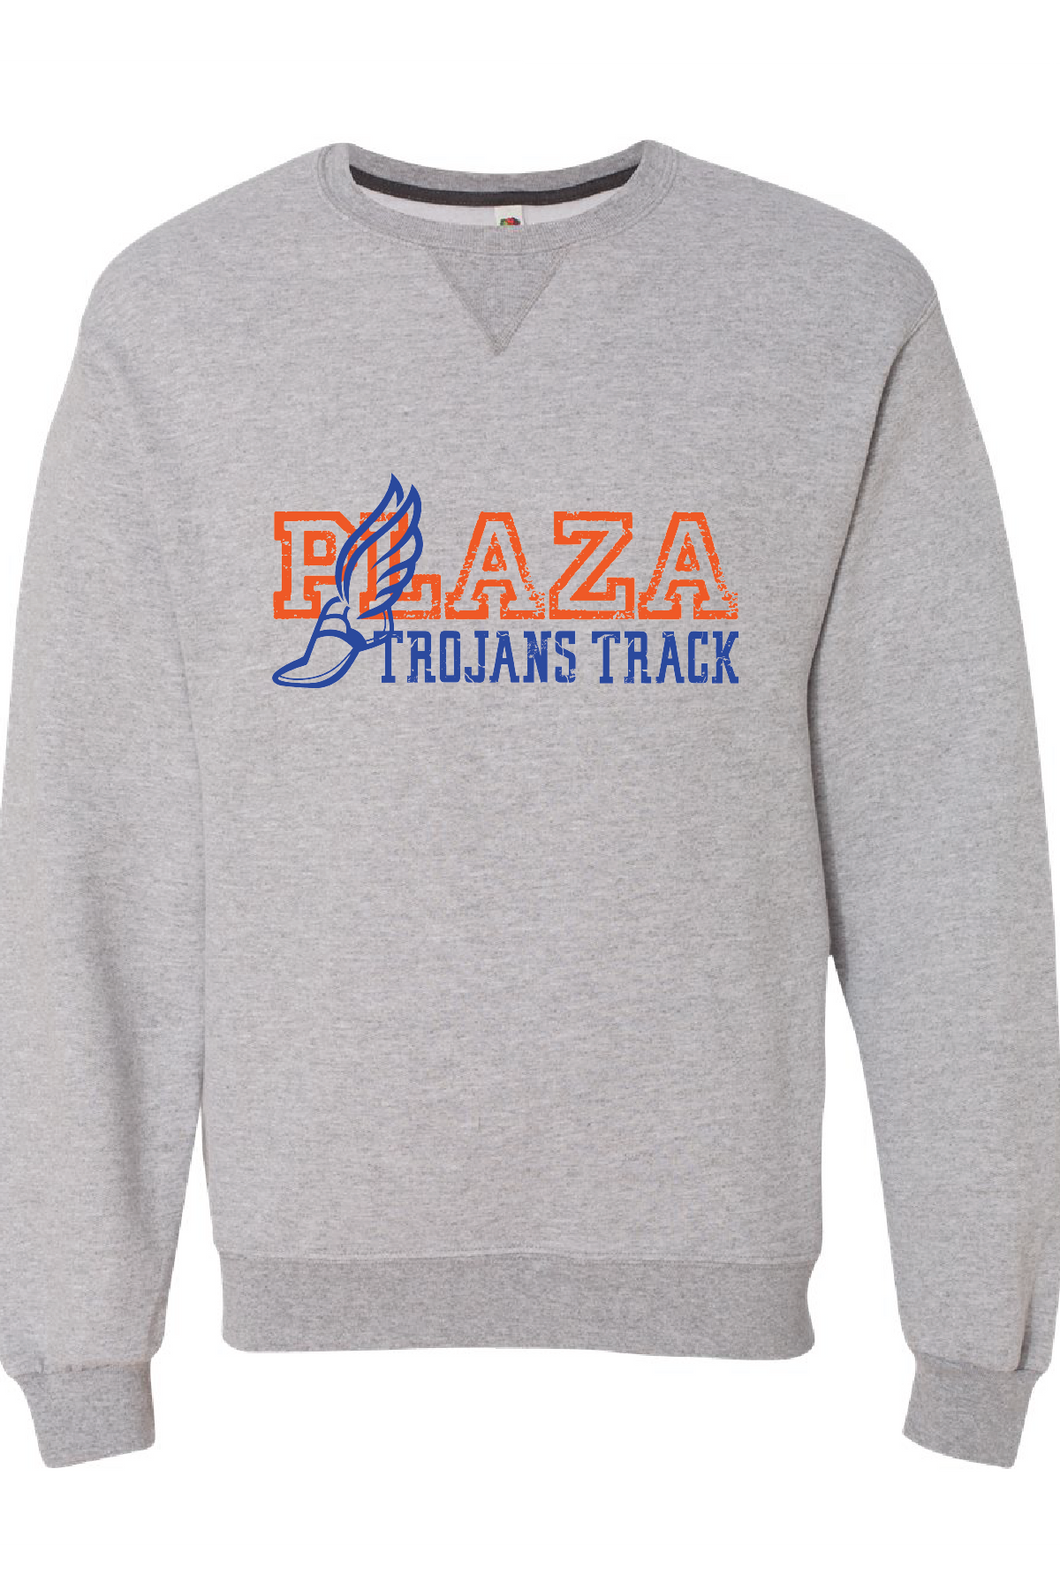 Sofspun Crewneck Sweatshirt / Athletic Heather / Plaza Middle School Track